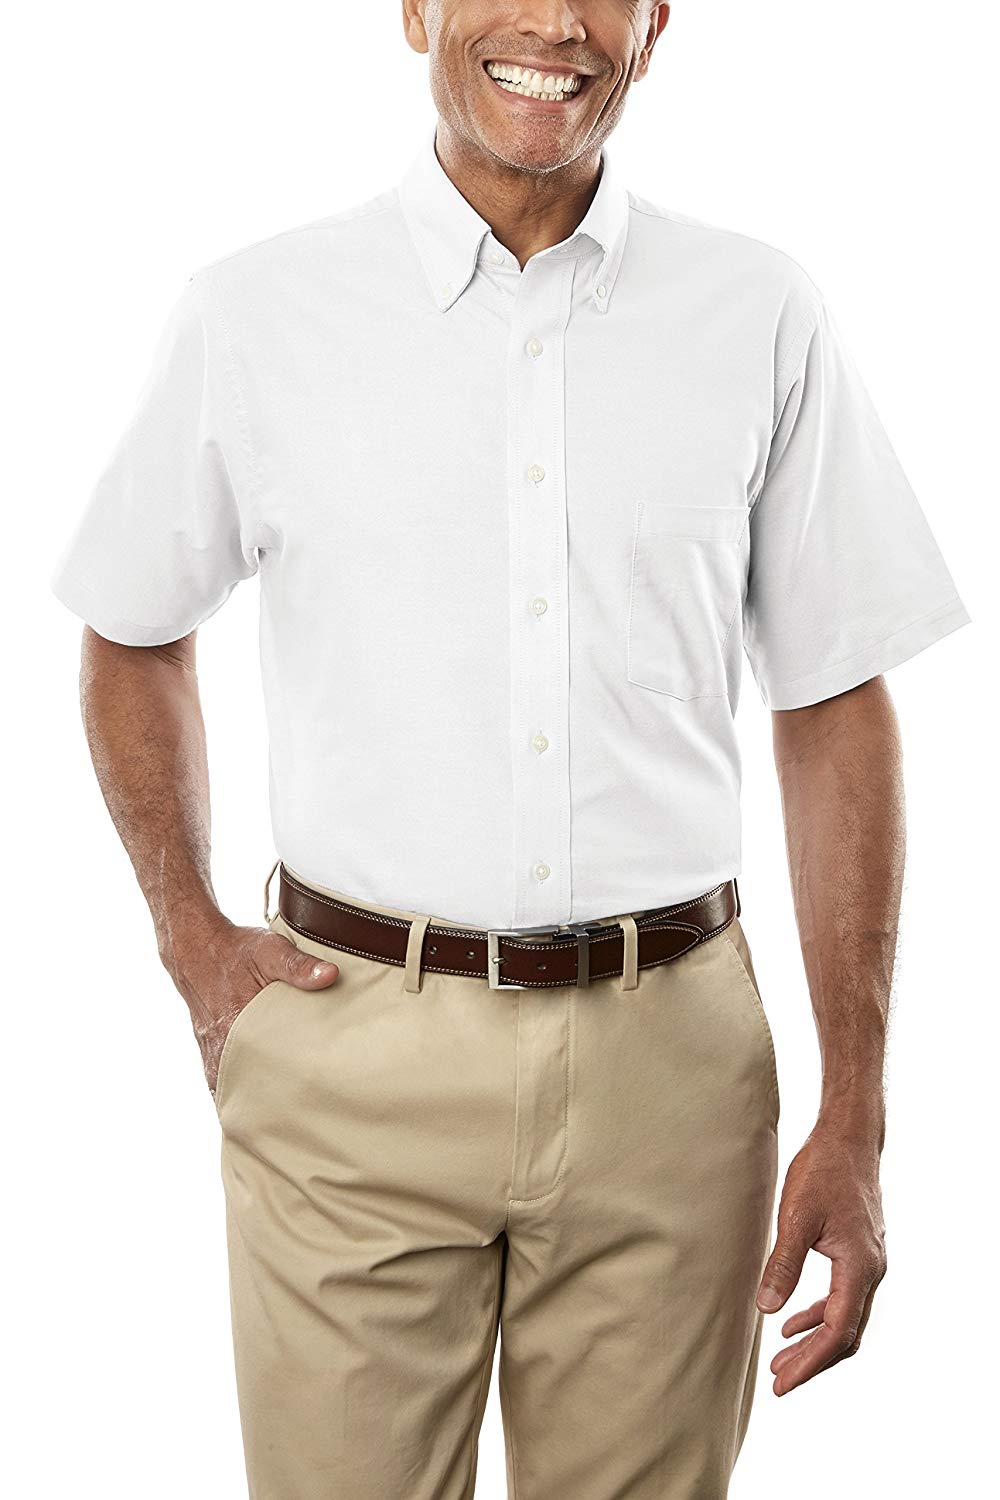 Van Heusen Men's Dress Shirts Short Sleeve Oxford Solid, White,, White ...